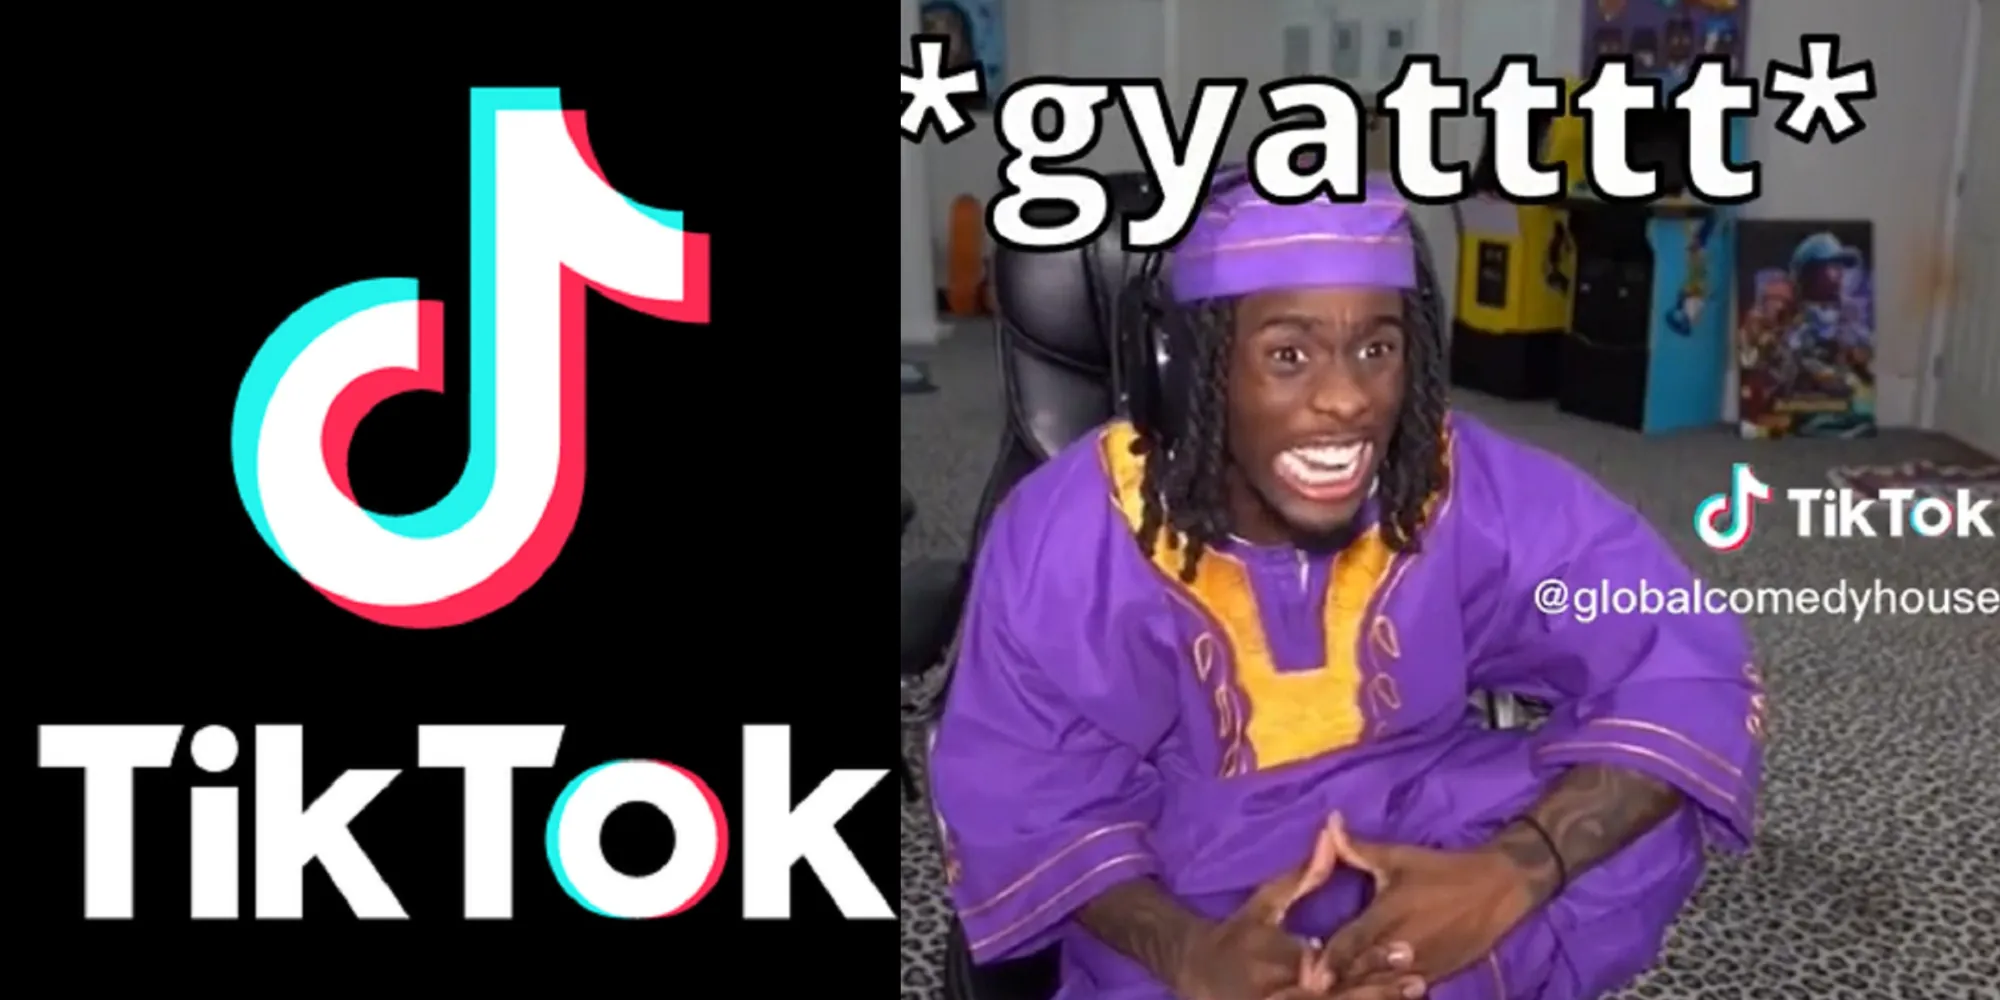 TikTok-What-does-GYATT-